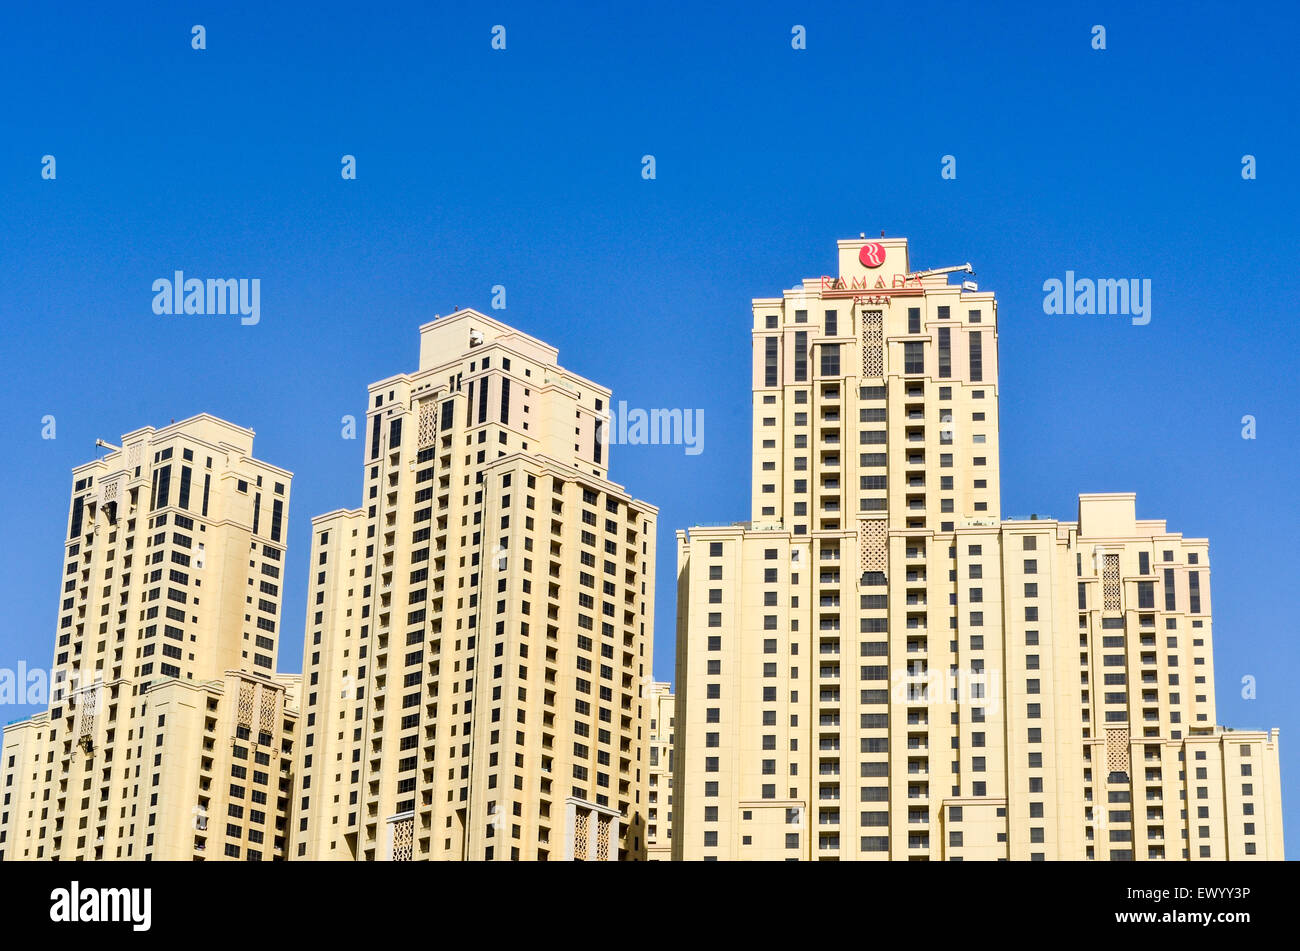 Ramada hotel at the Dubai Marina, United Arab Emirates Stock Photo